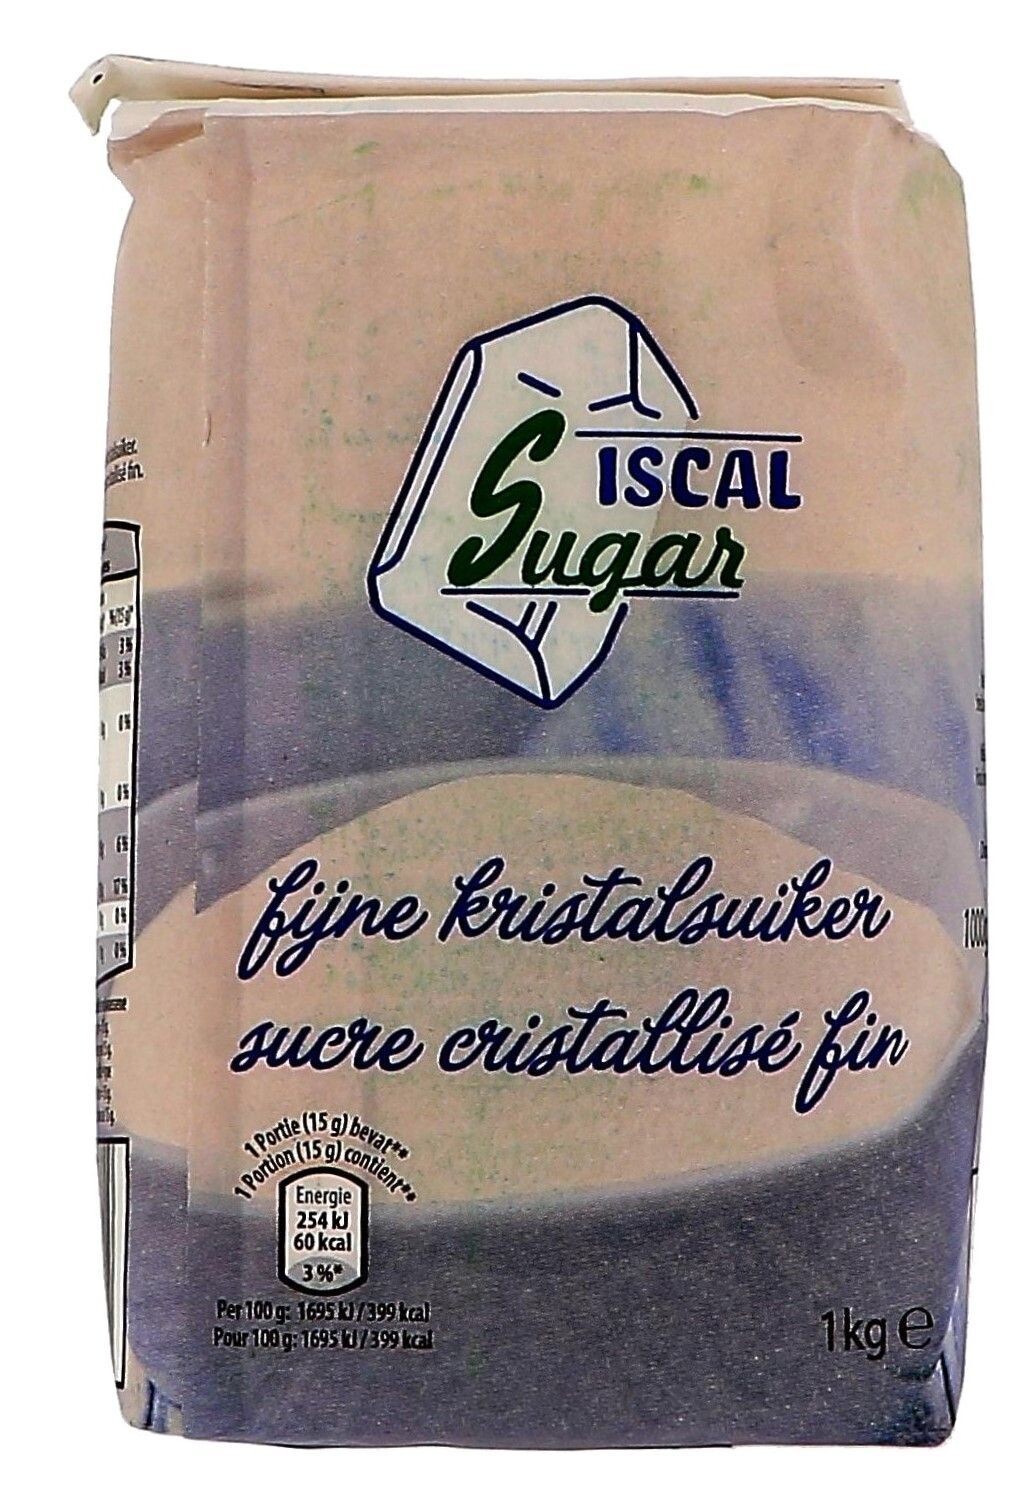 Fijne Kristalsuiker 1kg Iscal Sugar (Suiker)